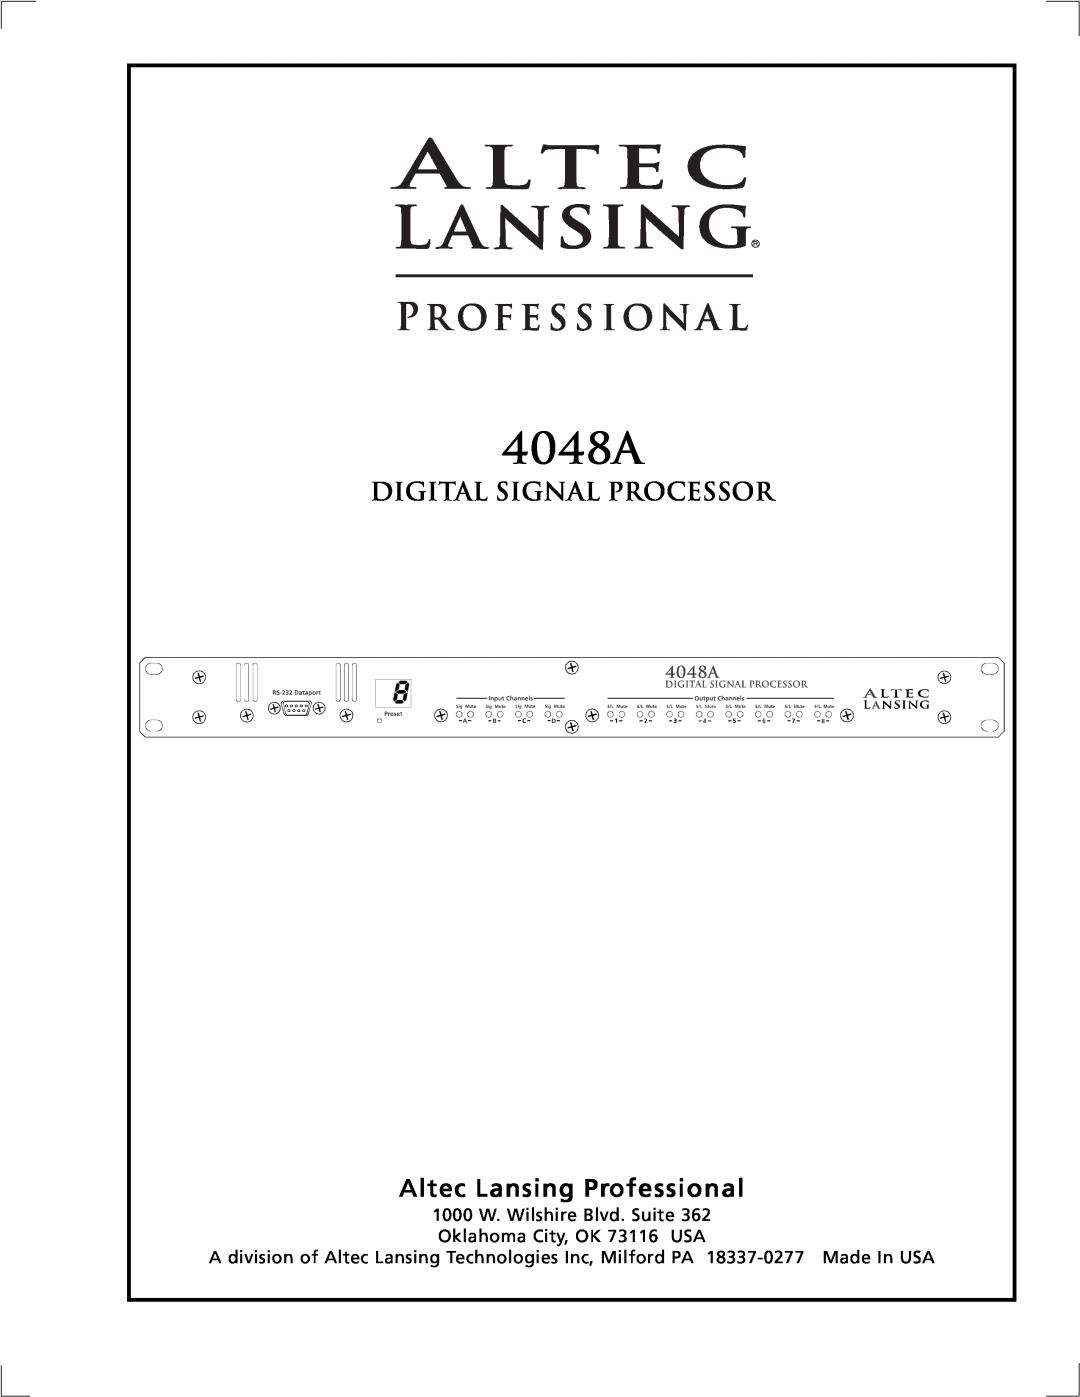 Altec Lansing 4948A, digital signal processor manual Digital Signal Processor, Altec Lansing Professional, 4048A 